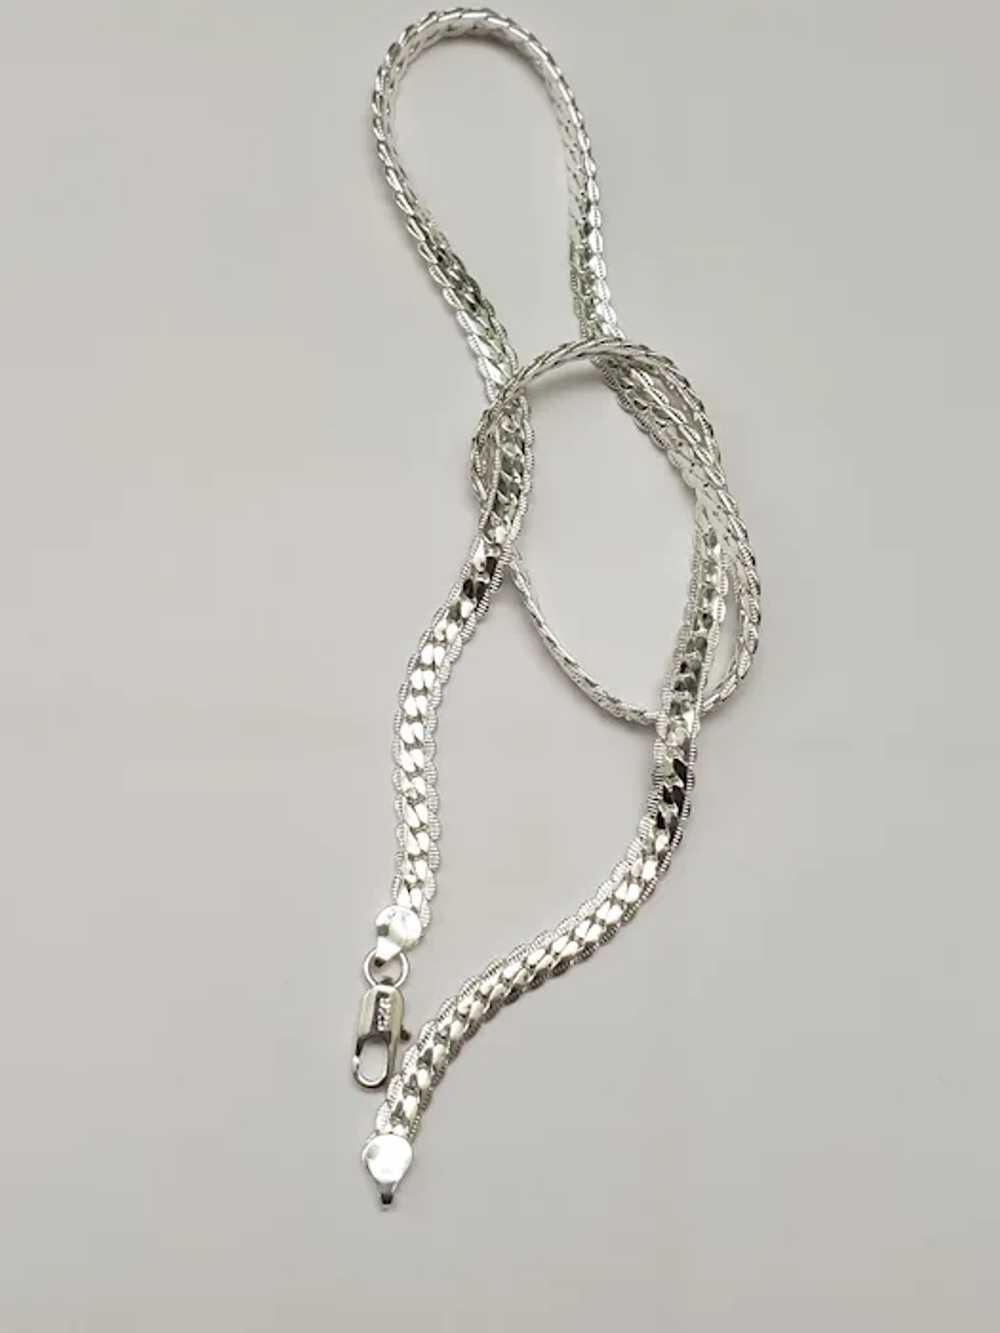 Unisex Sterling Silver Necklace , 20", 26.7gr. - image 2